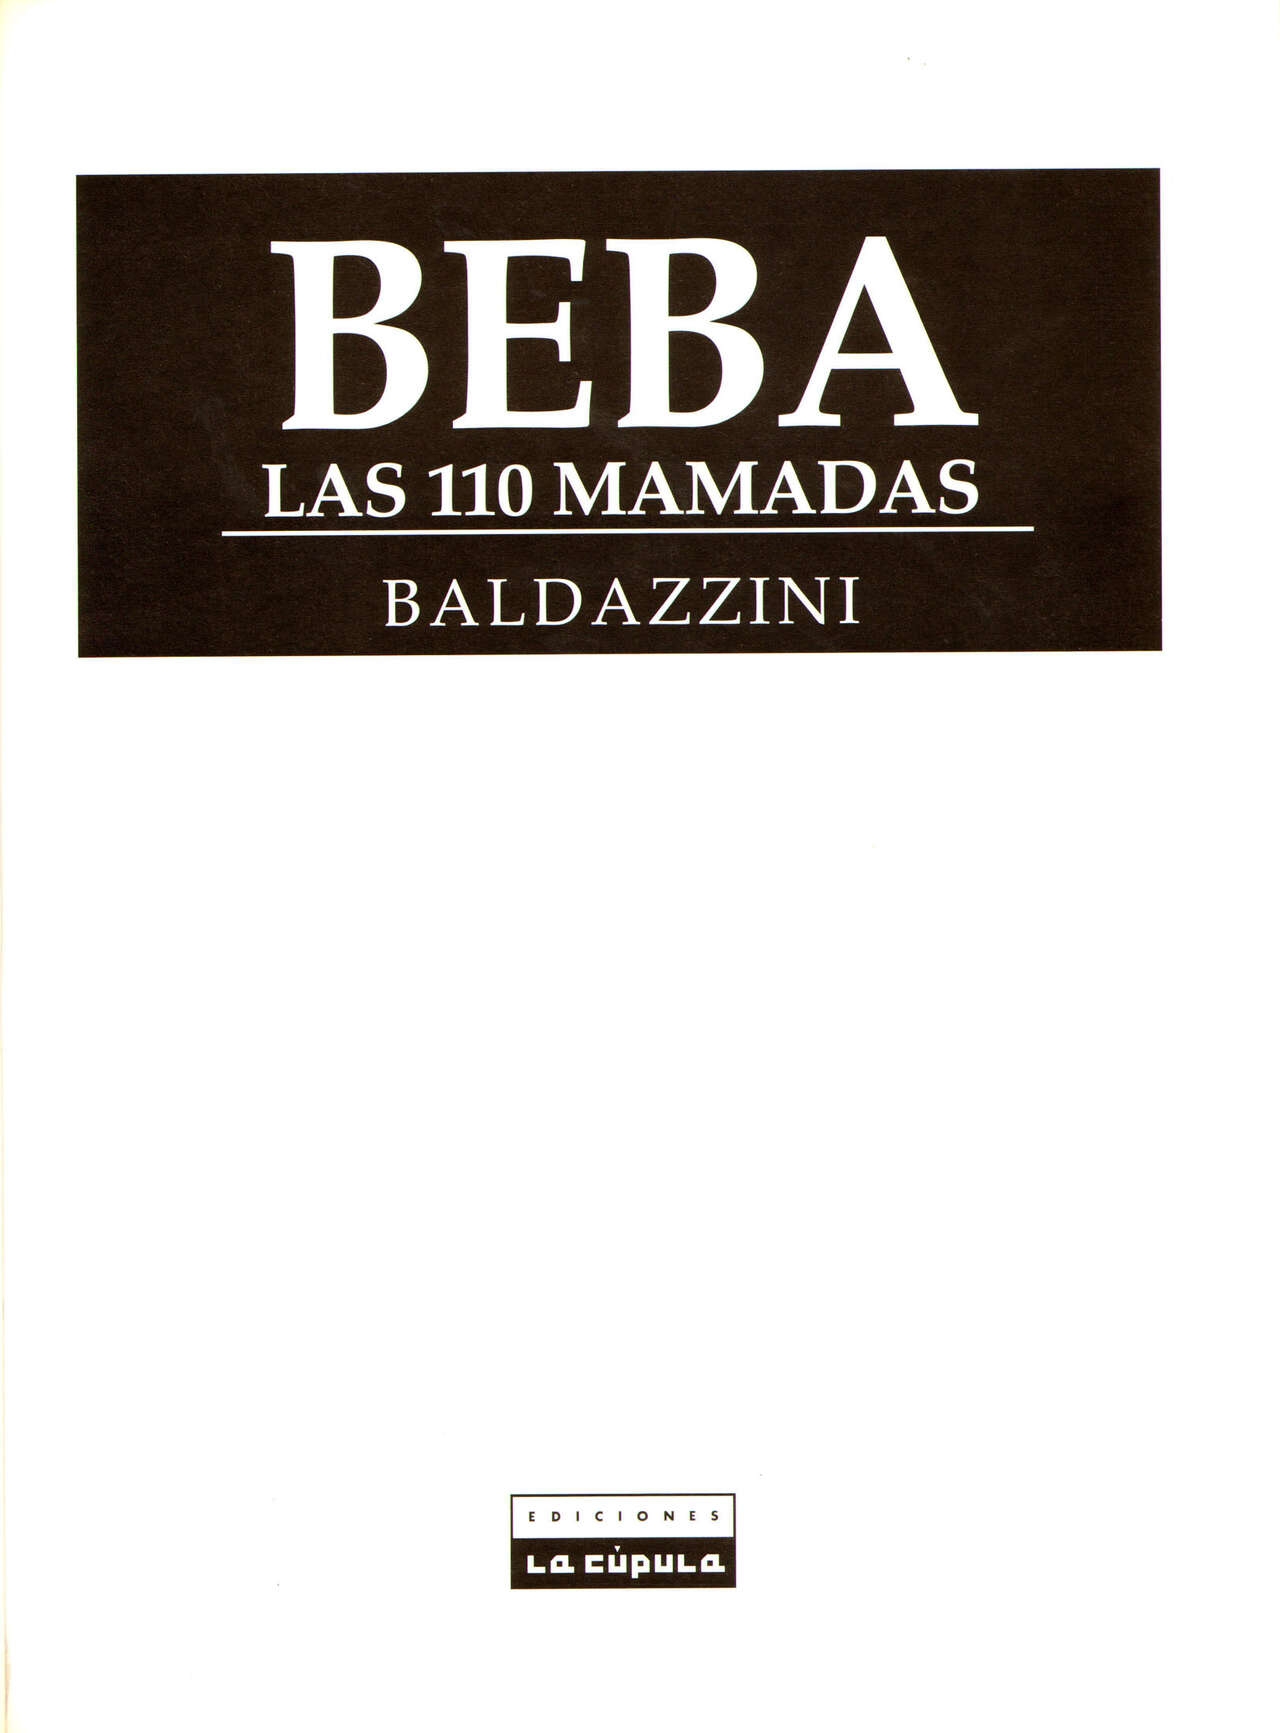 [Baldazzini] Beba Las 110 mamadas  [Spanish] 2